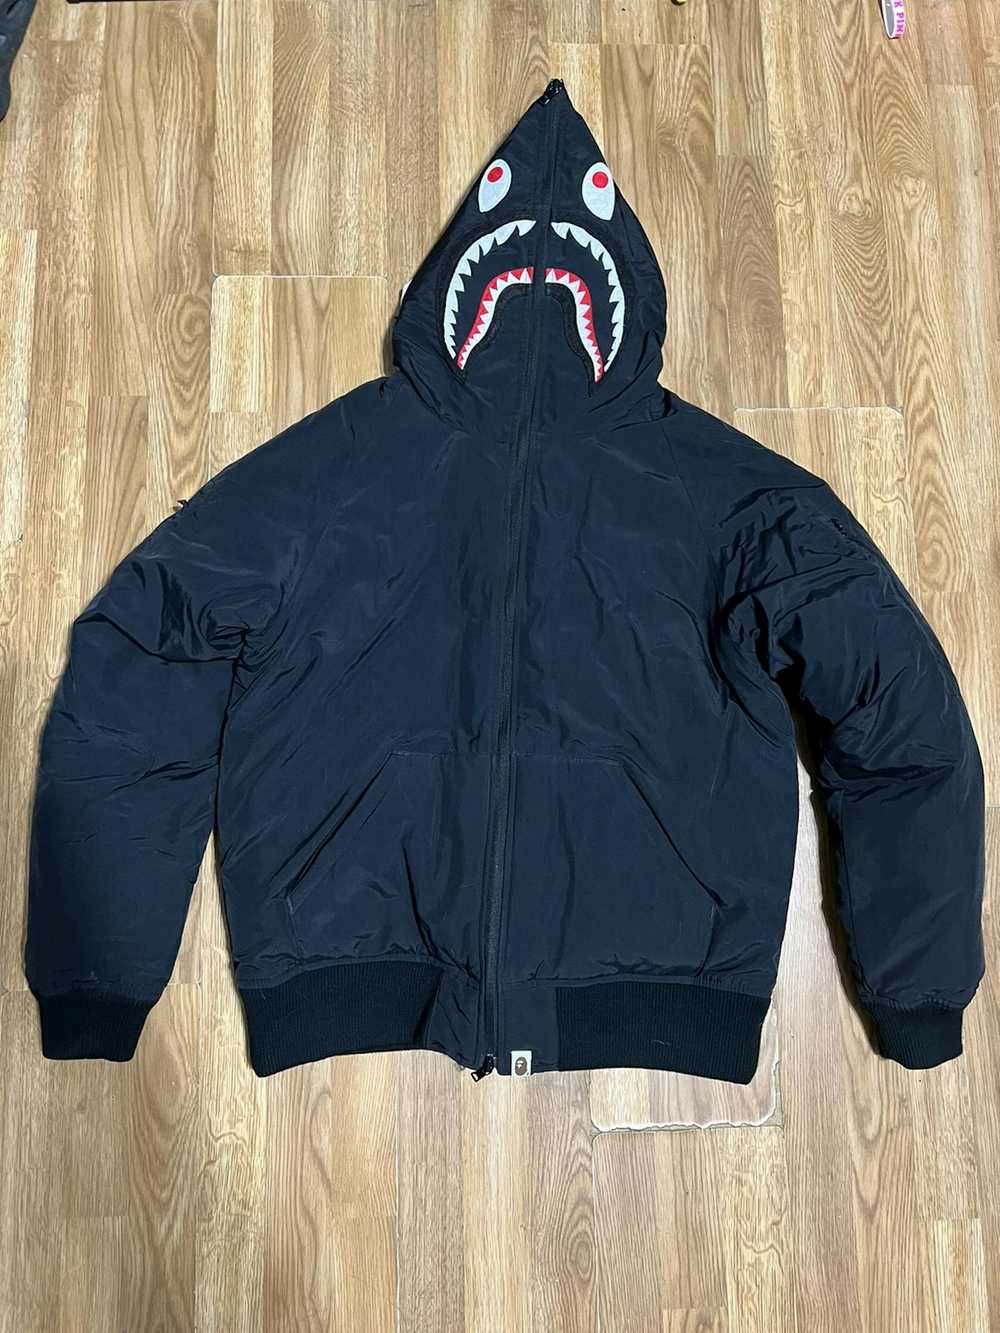 Bape Shark Down Hoodie Jacket - image 1